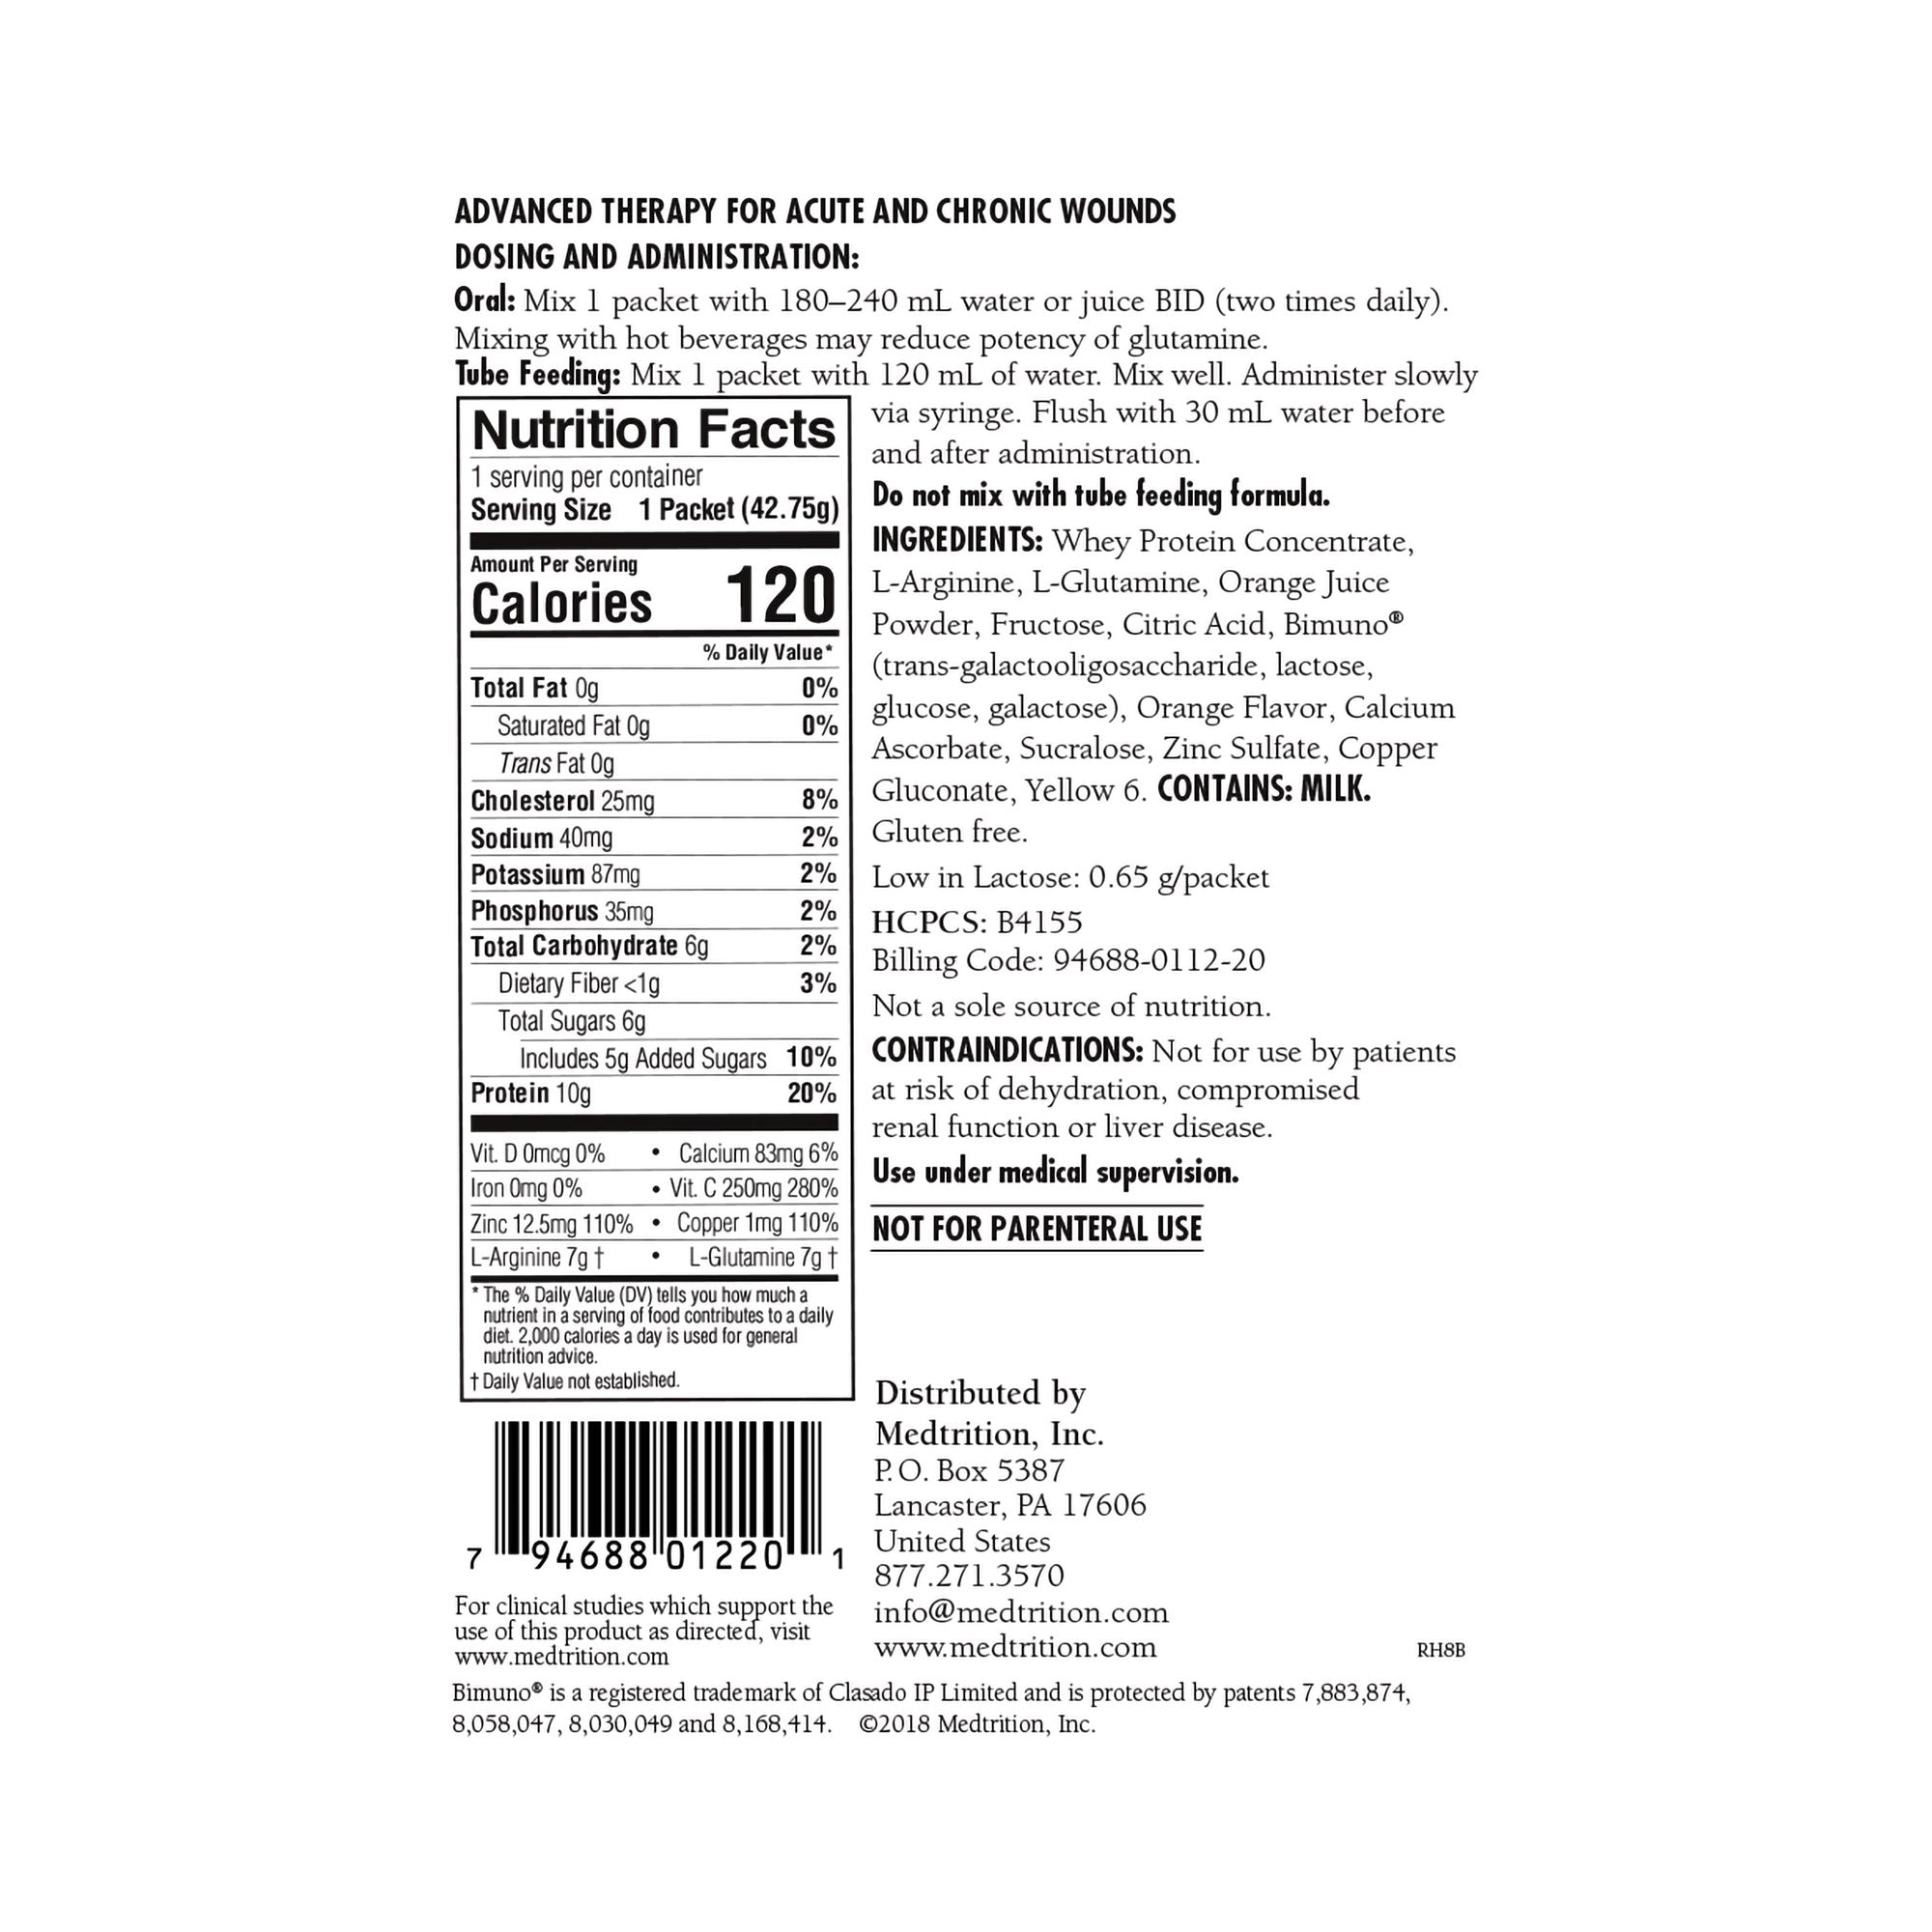 Oral Supplement ArgiMent AT Orange Crme Flavor Powder 1.5 oz. Individual Packet